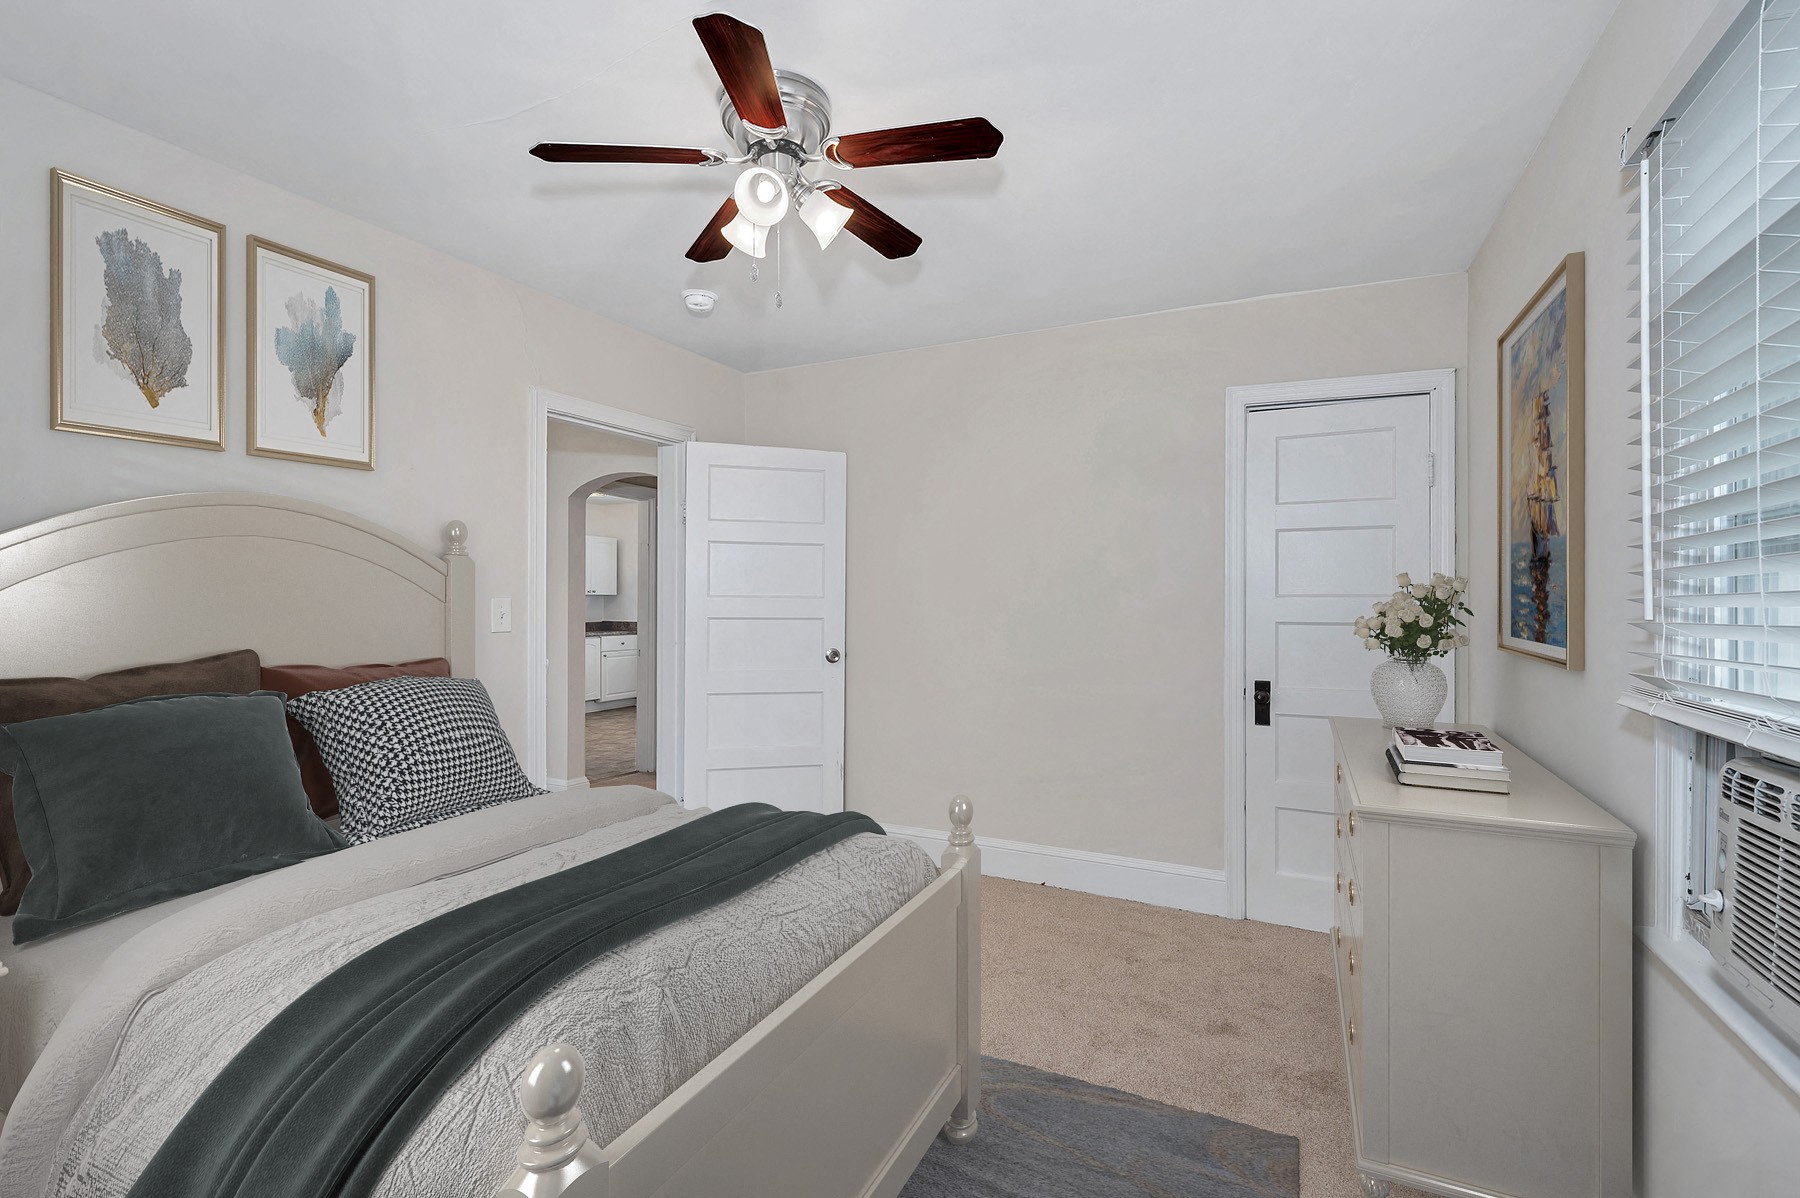 Cozy bedroom with ceiling fan